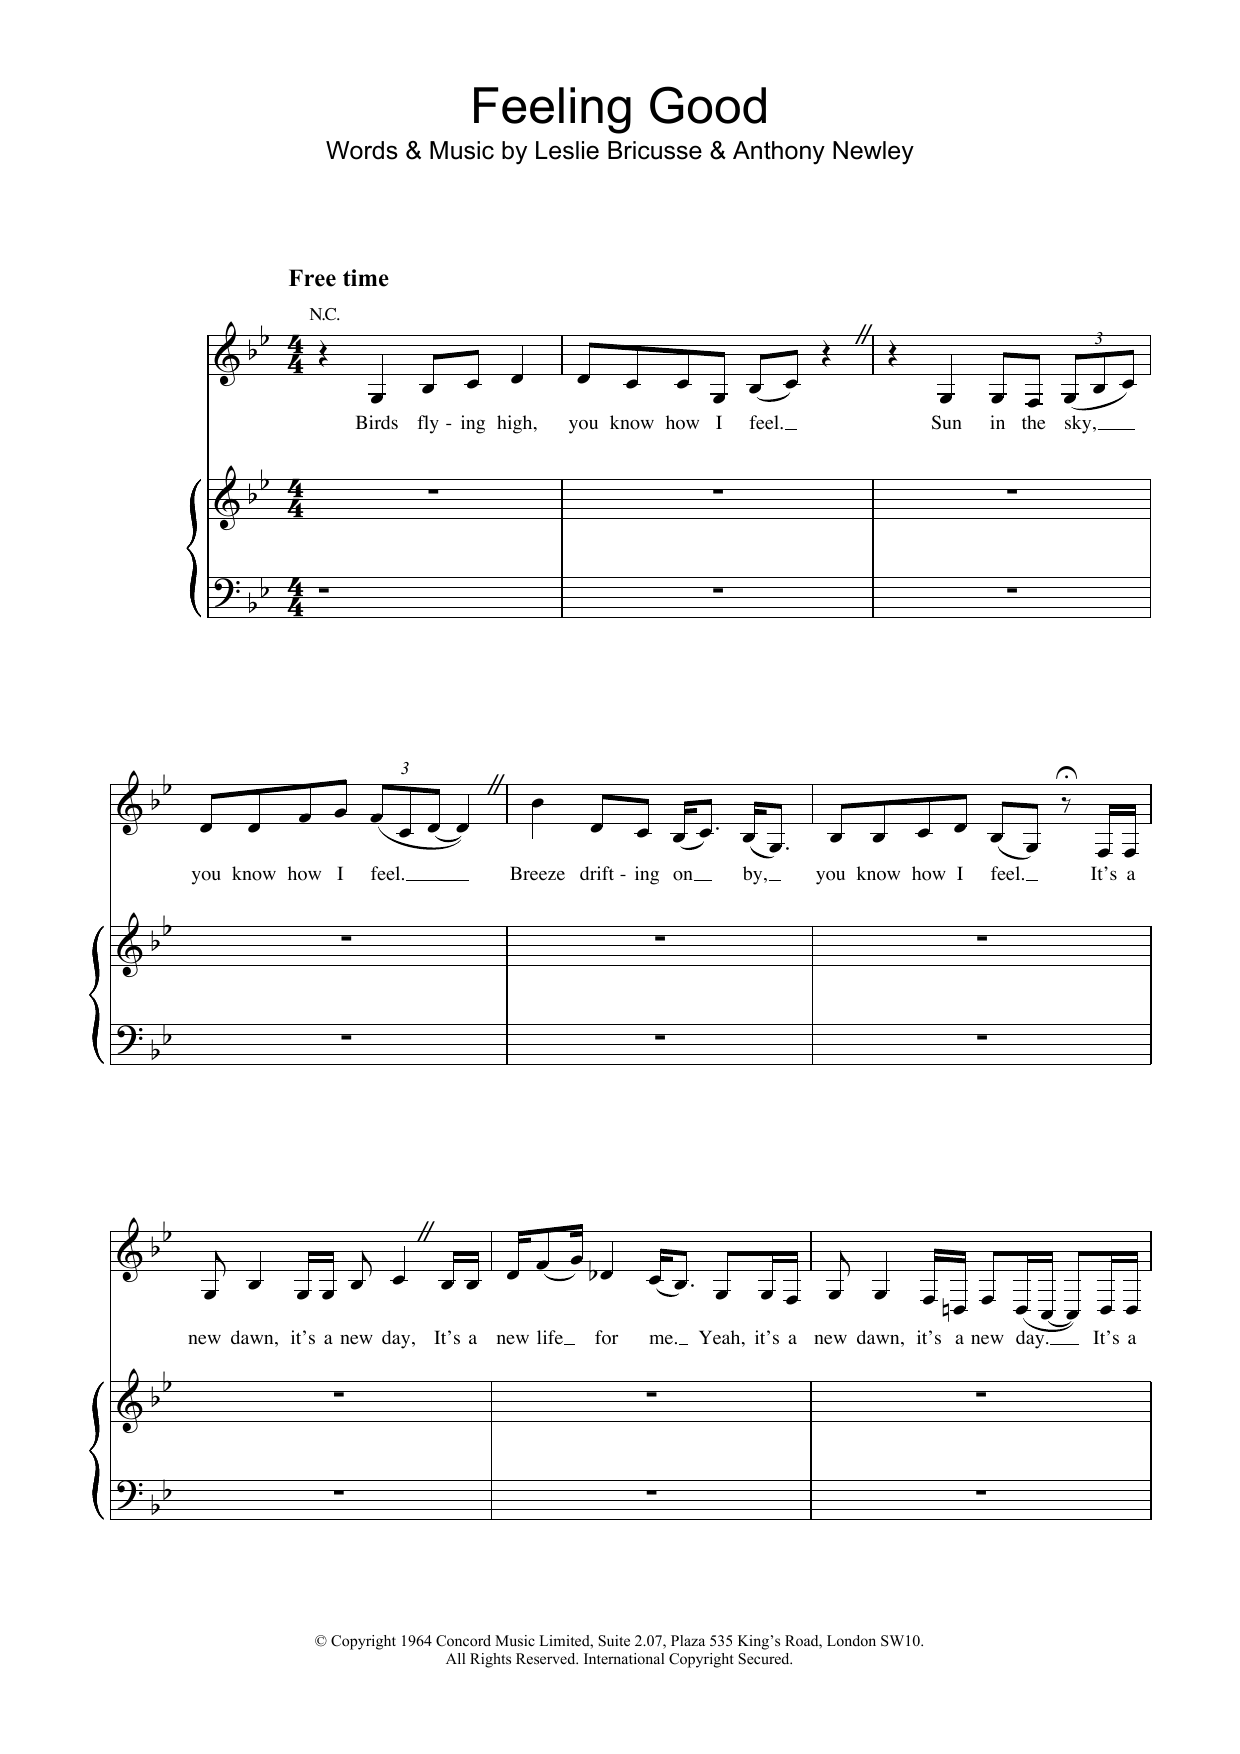 Nina Simone Feeling Good Sheet Music Notes & Chords for Piano, Vocal & Guitar - Download or Print PDF